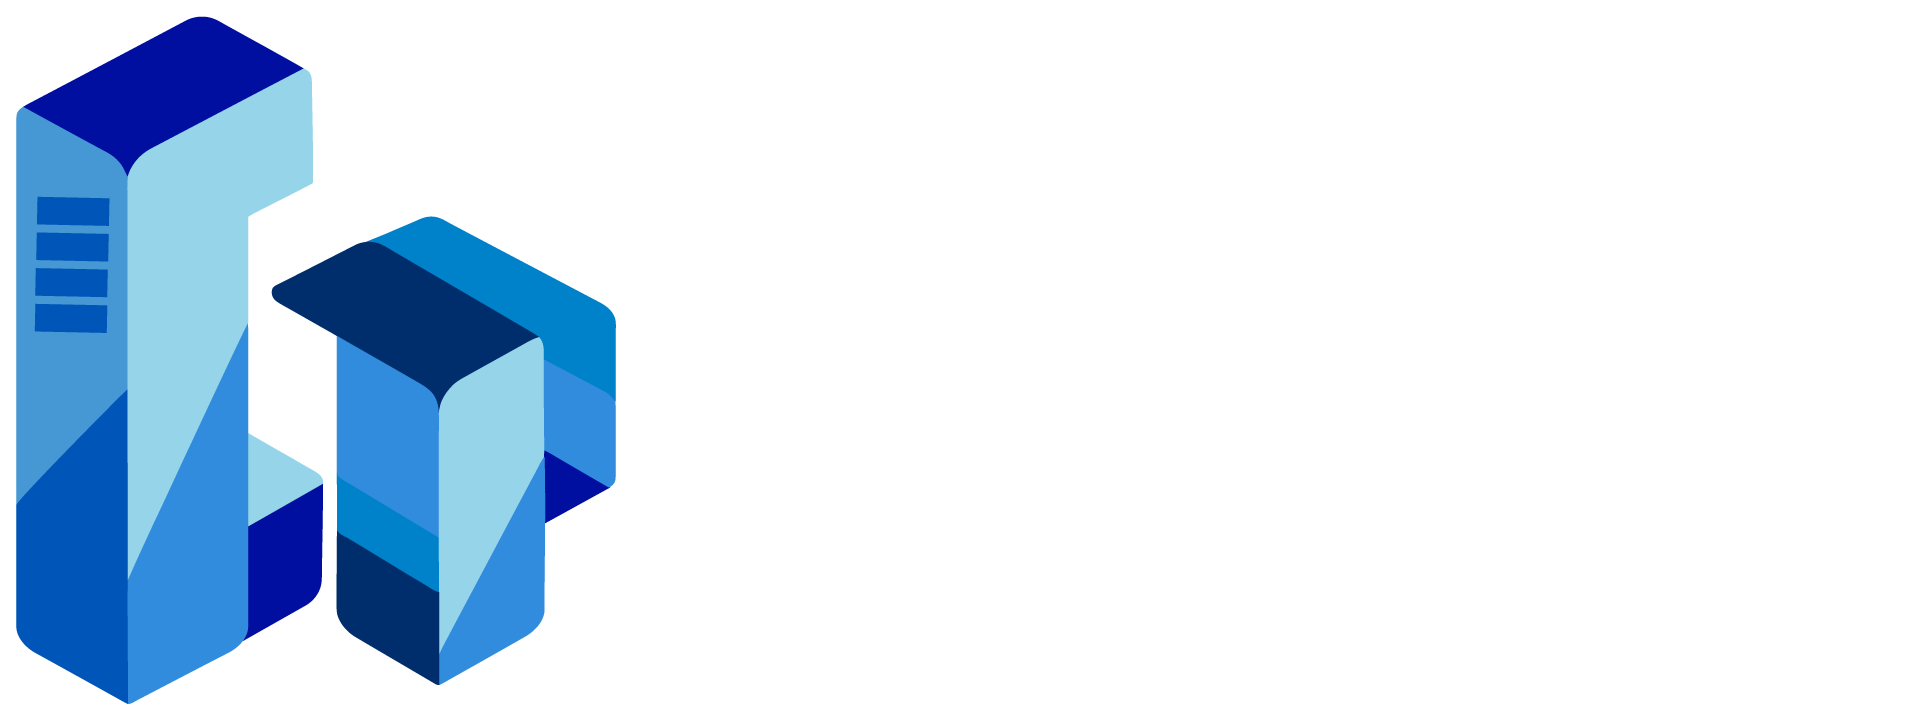 ConTech & PropTech Alliance